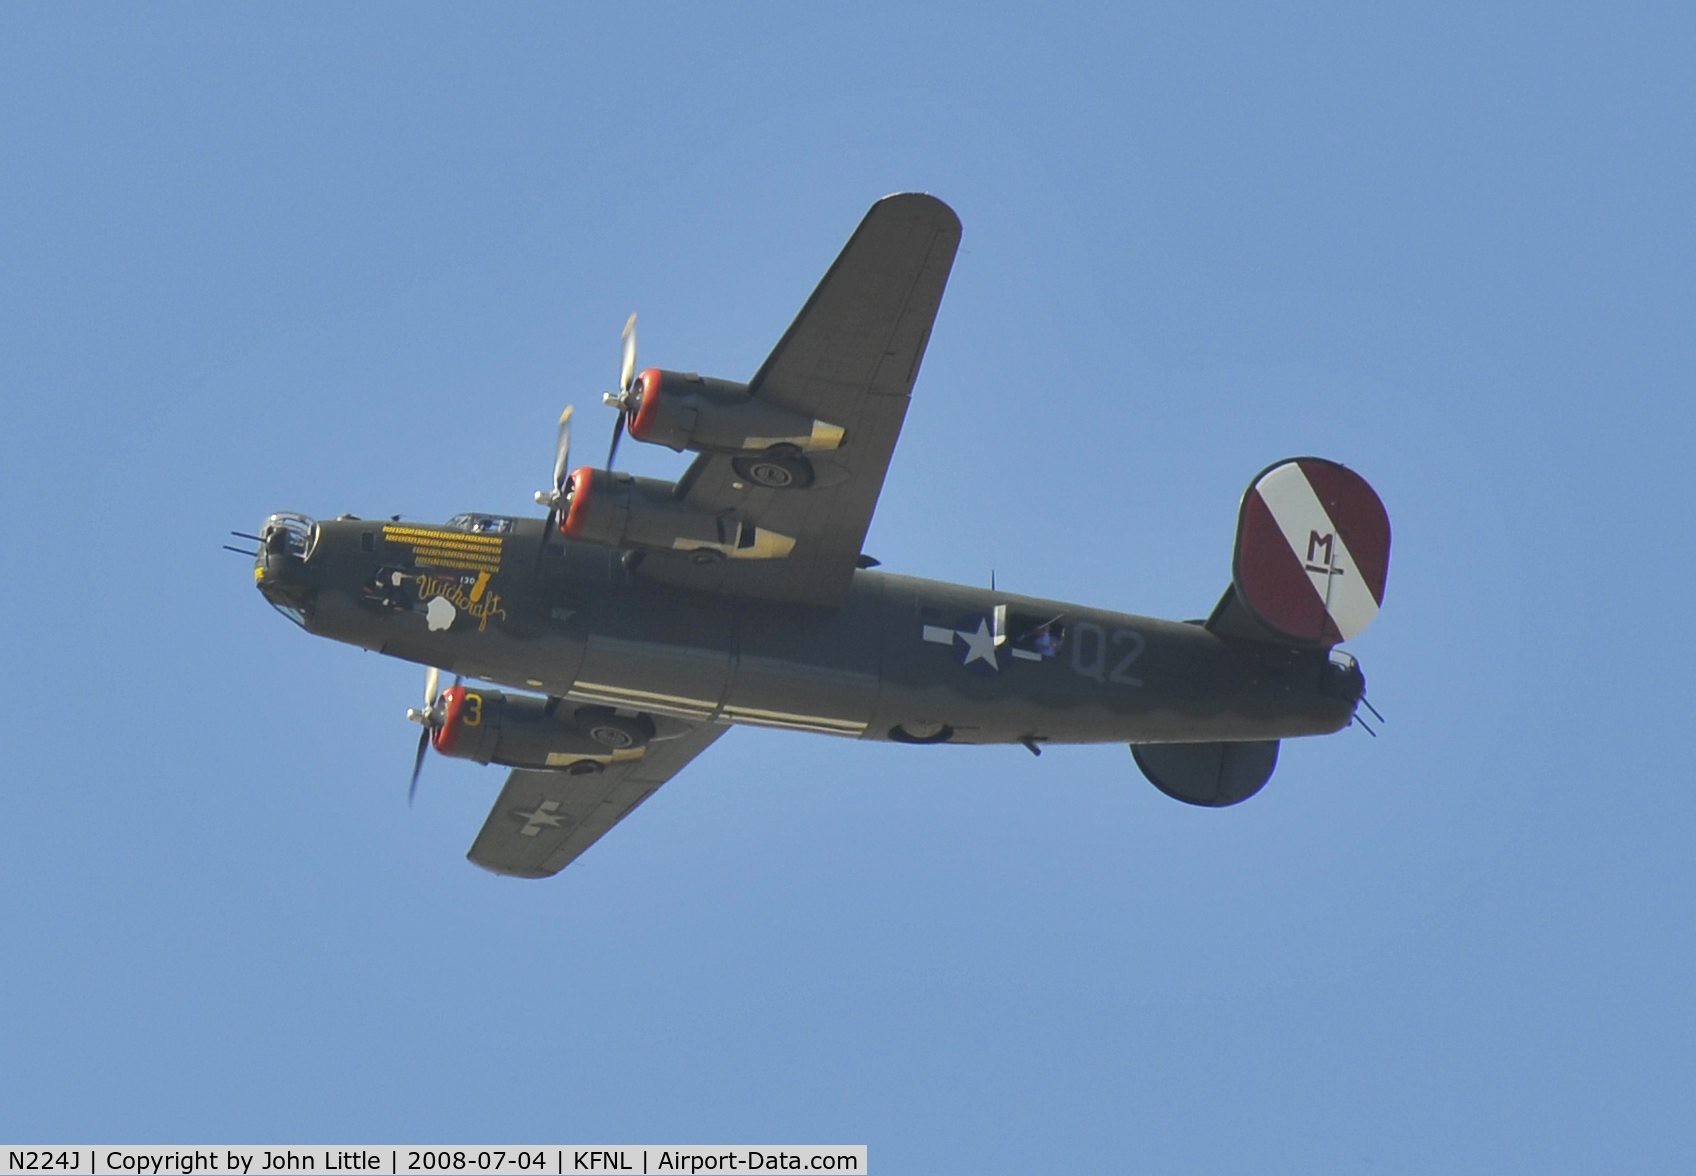 N224J, 1944 Consolidated B-24J-85-CF Liberator C/N 1347 (44-44052), B-24 Collings Group